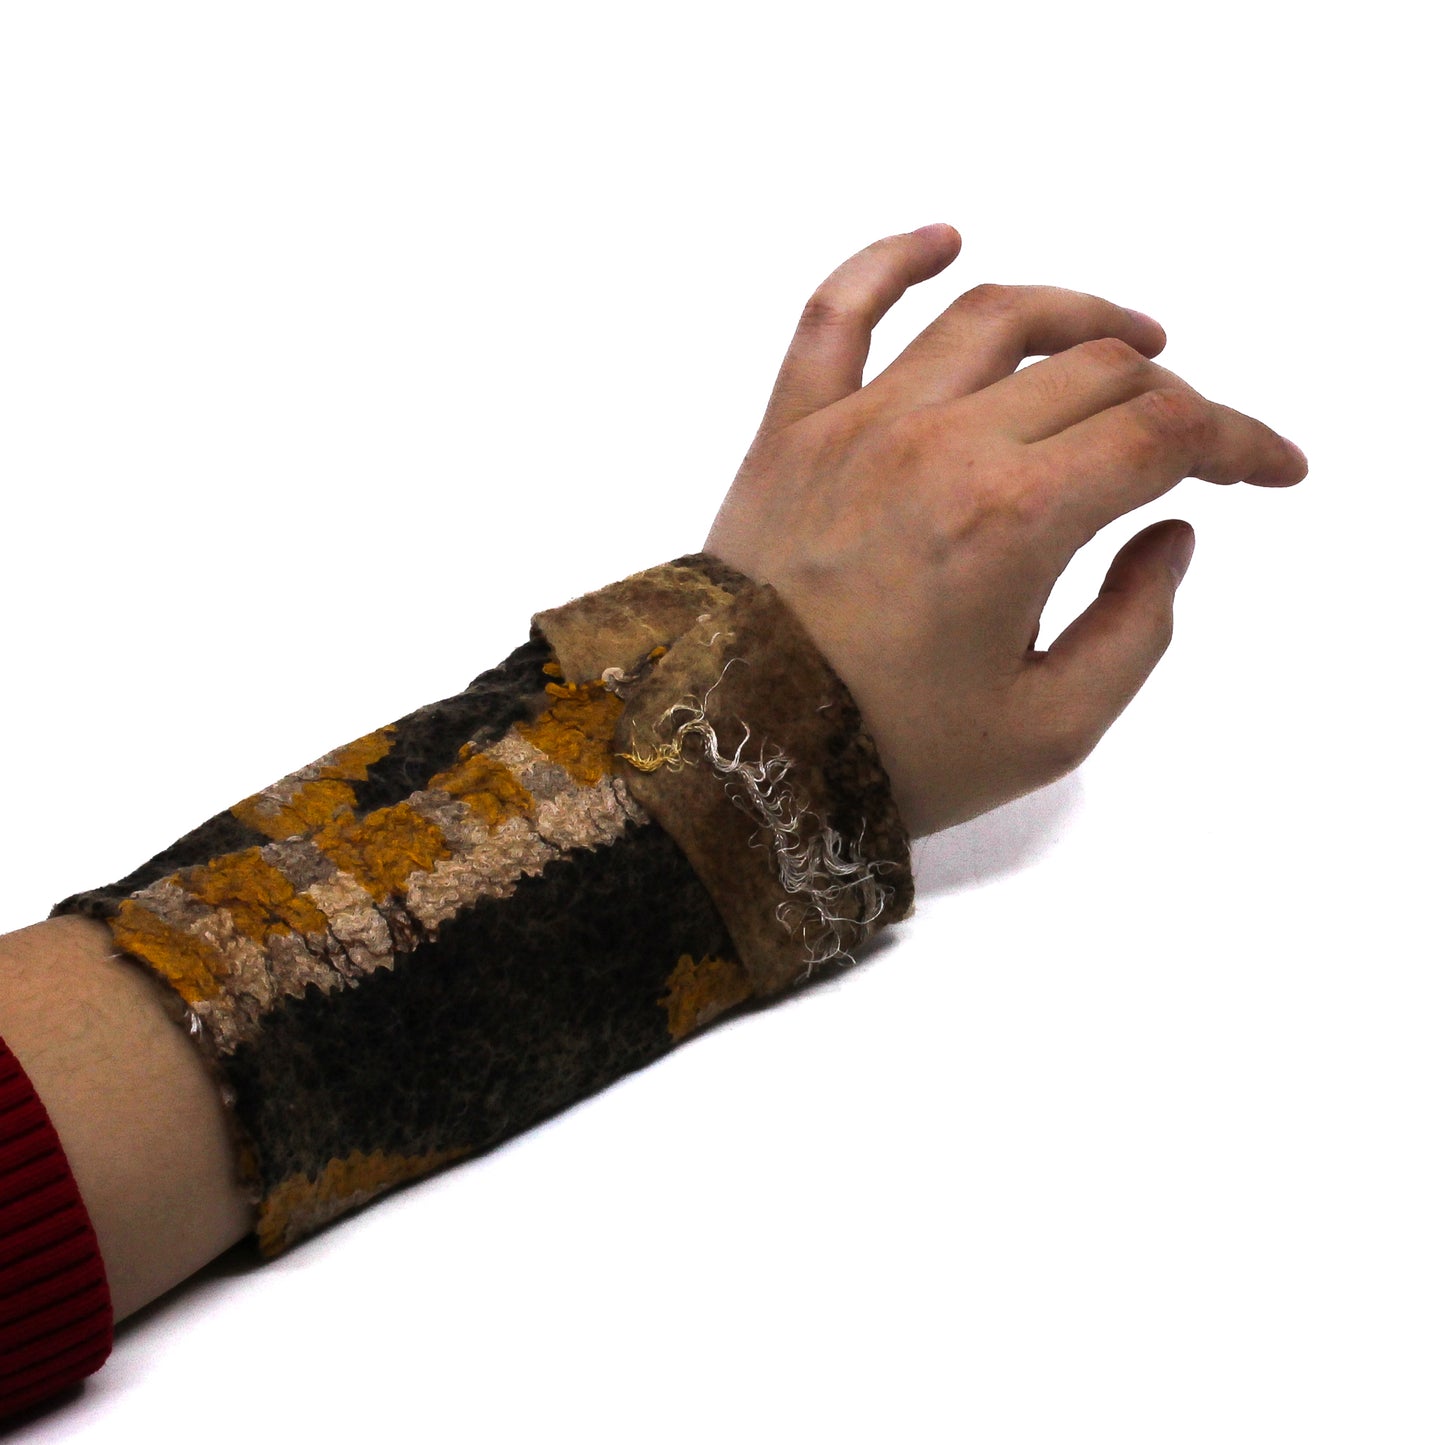 An arm wearing brown wrist warmer